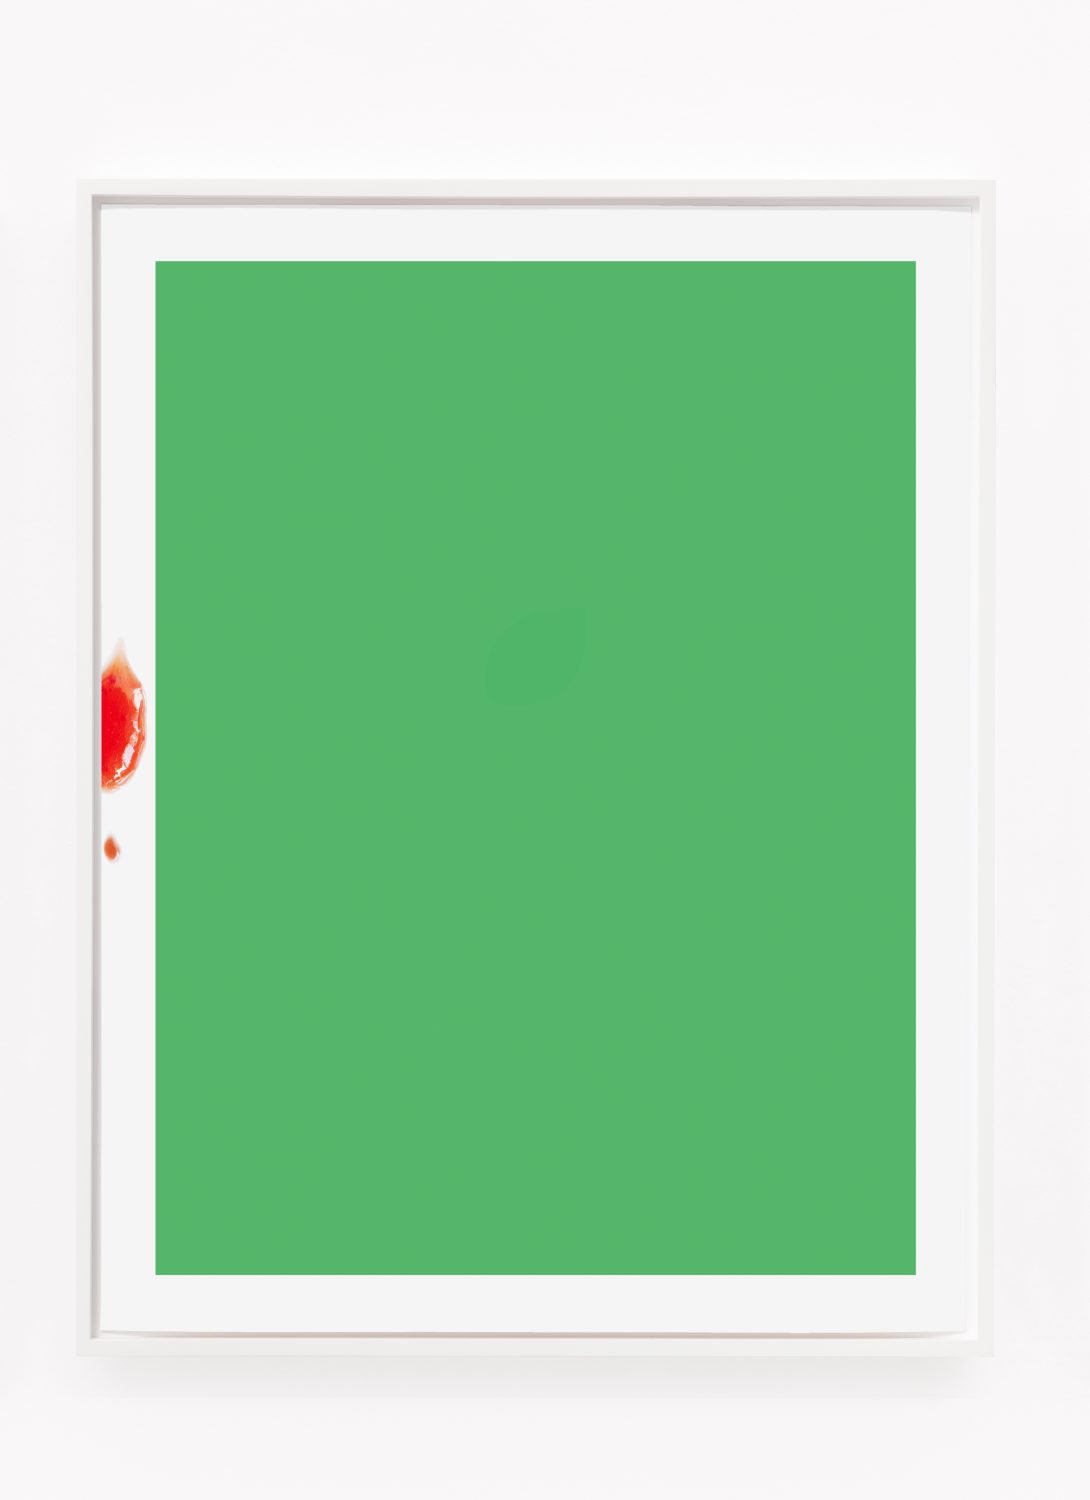 Lisa HolzerF_F_Untitled (a objet petit a monochrome green), 2011Pigment print on cotton paper52.5 x 70 cm